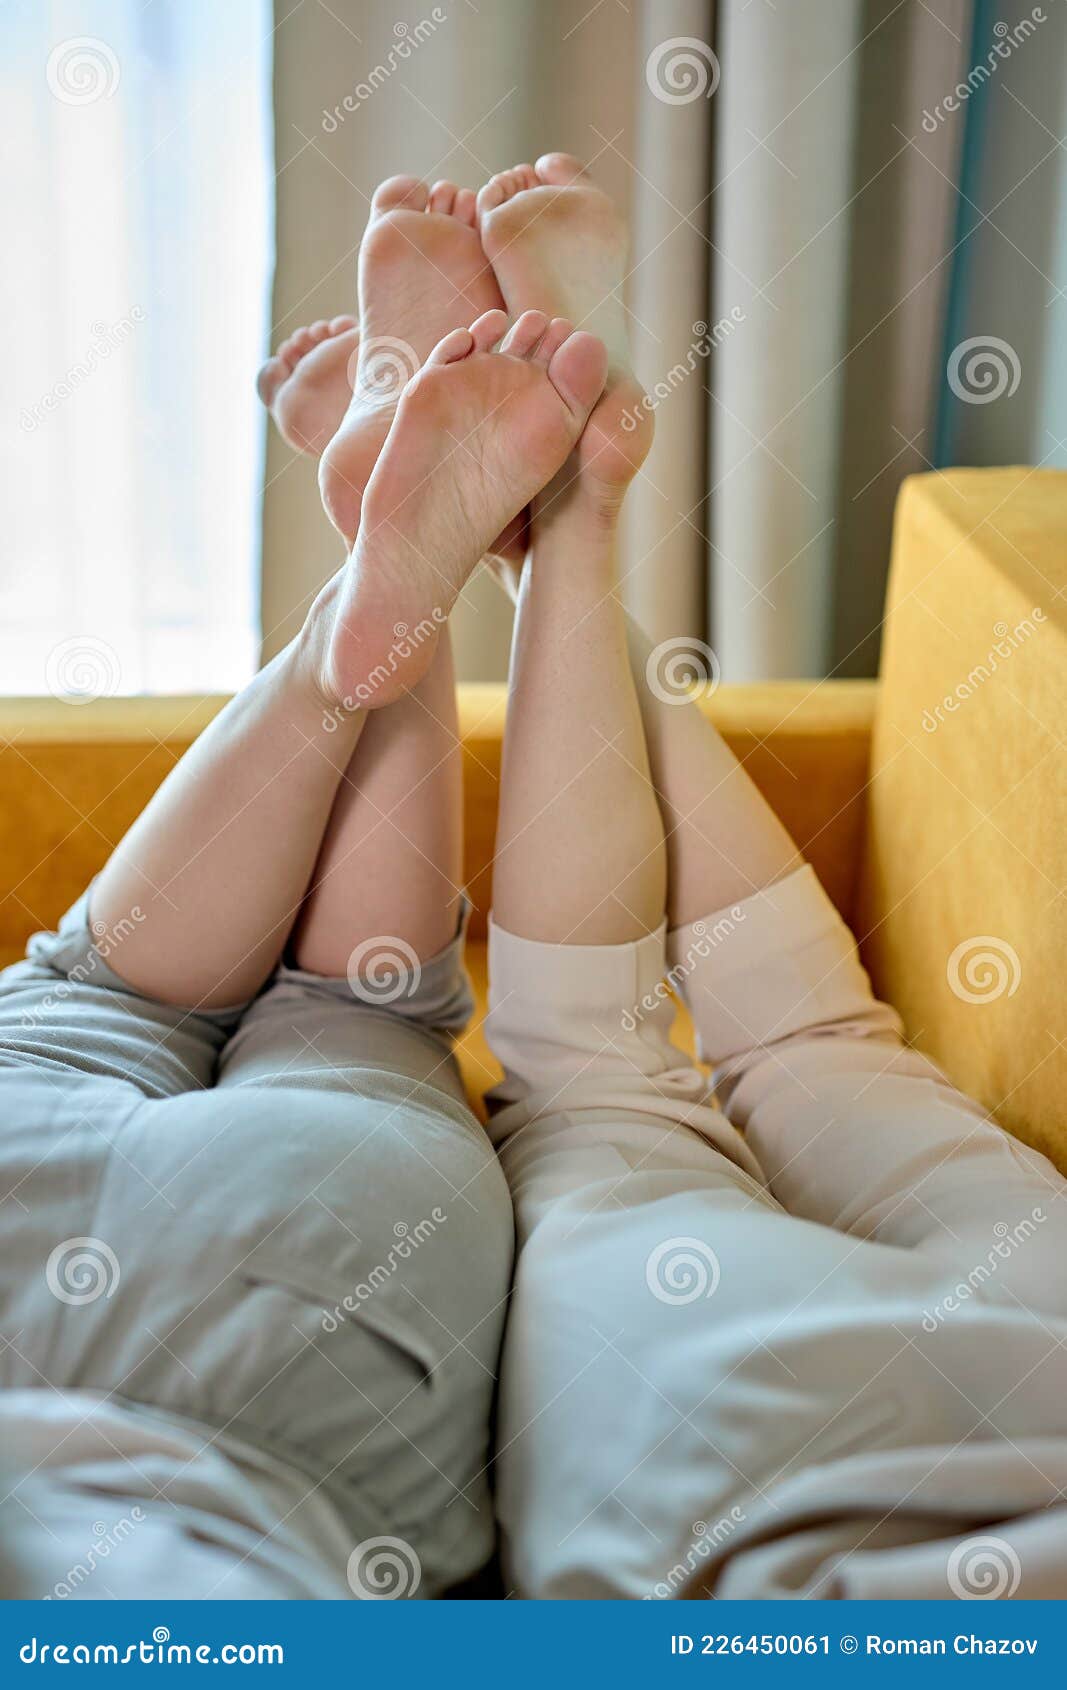 Lesbian dirty feet